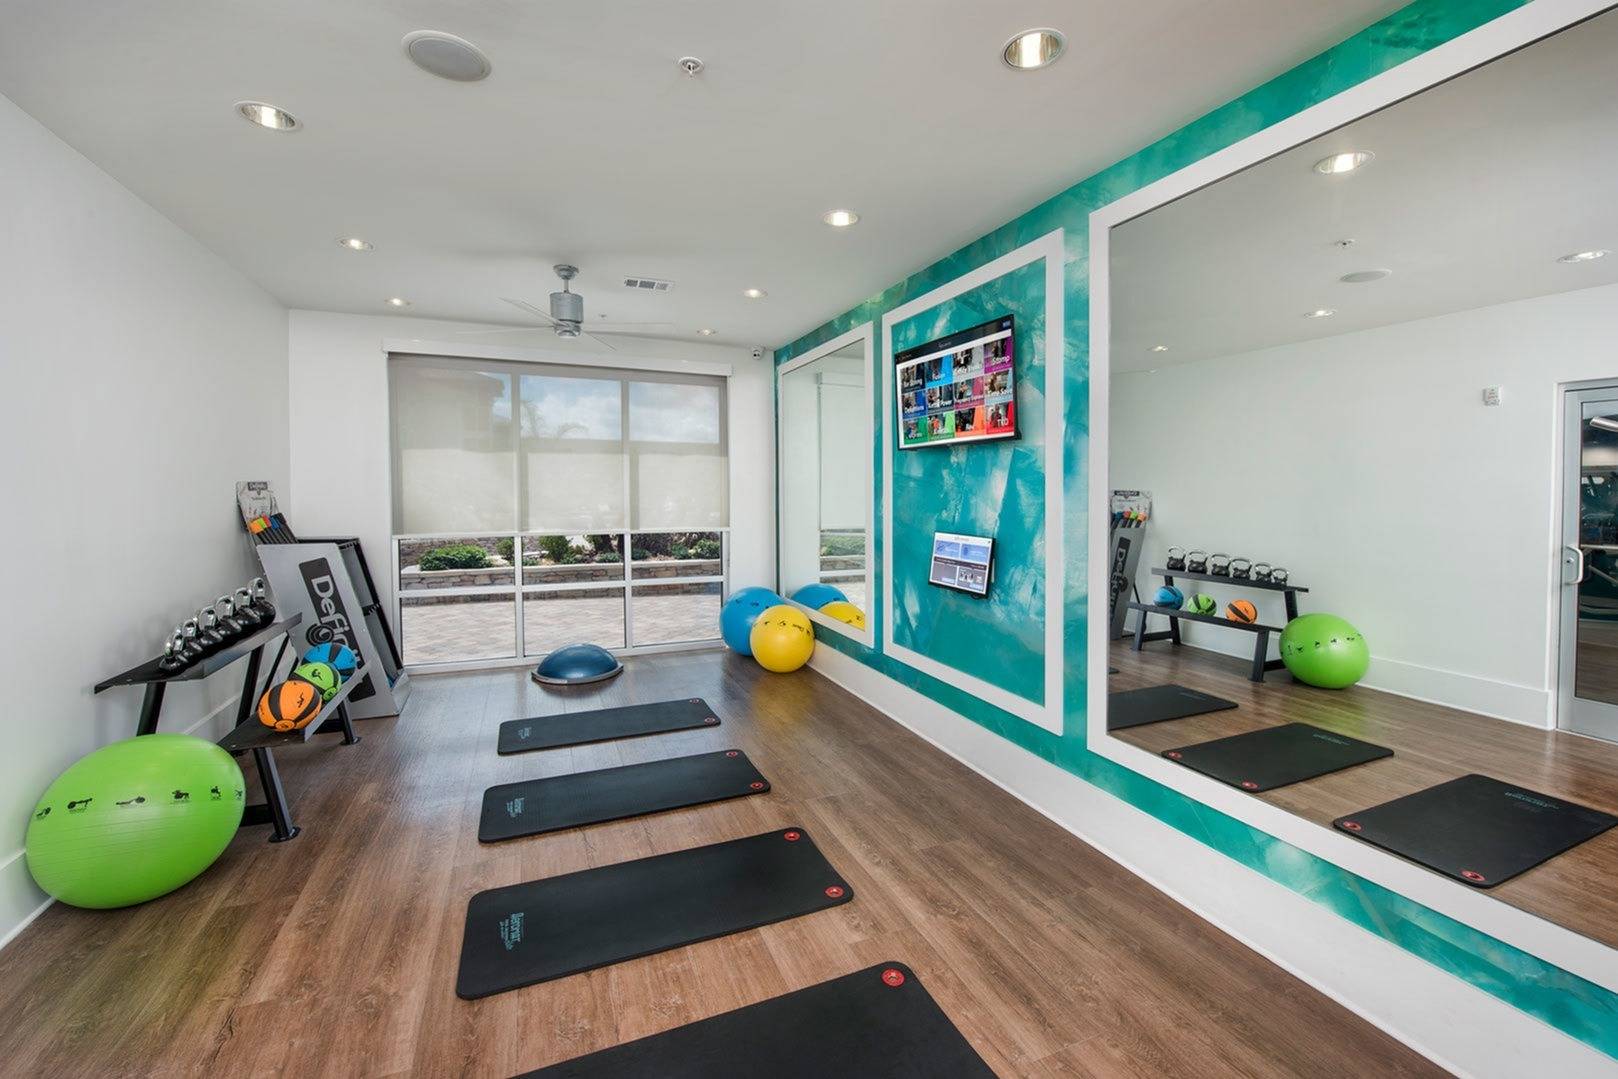 Yoga Room | Apartments for rent in Jacksonville, FL | Sorrel